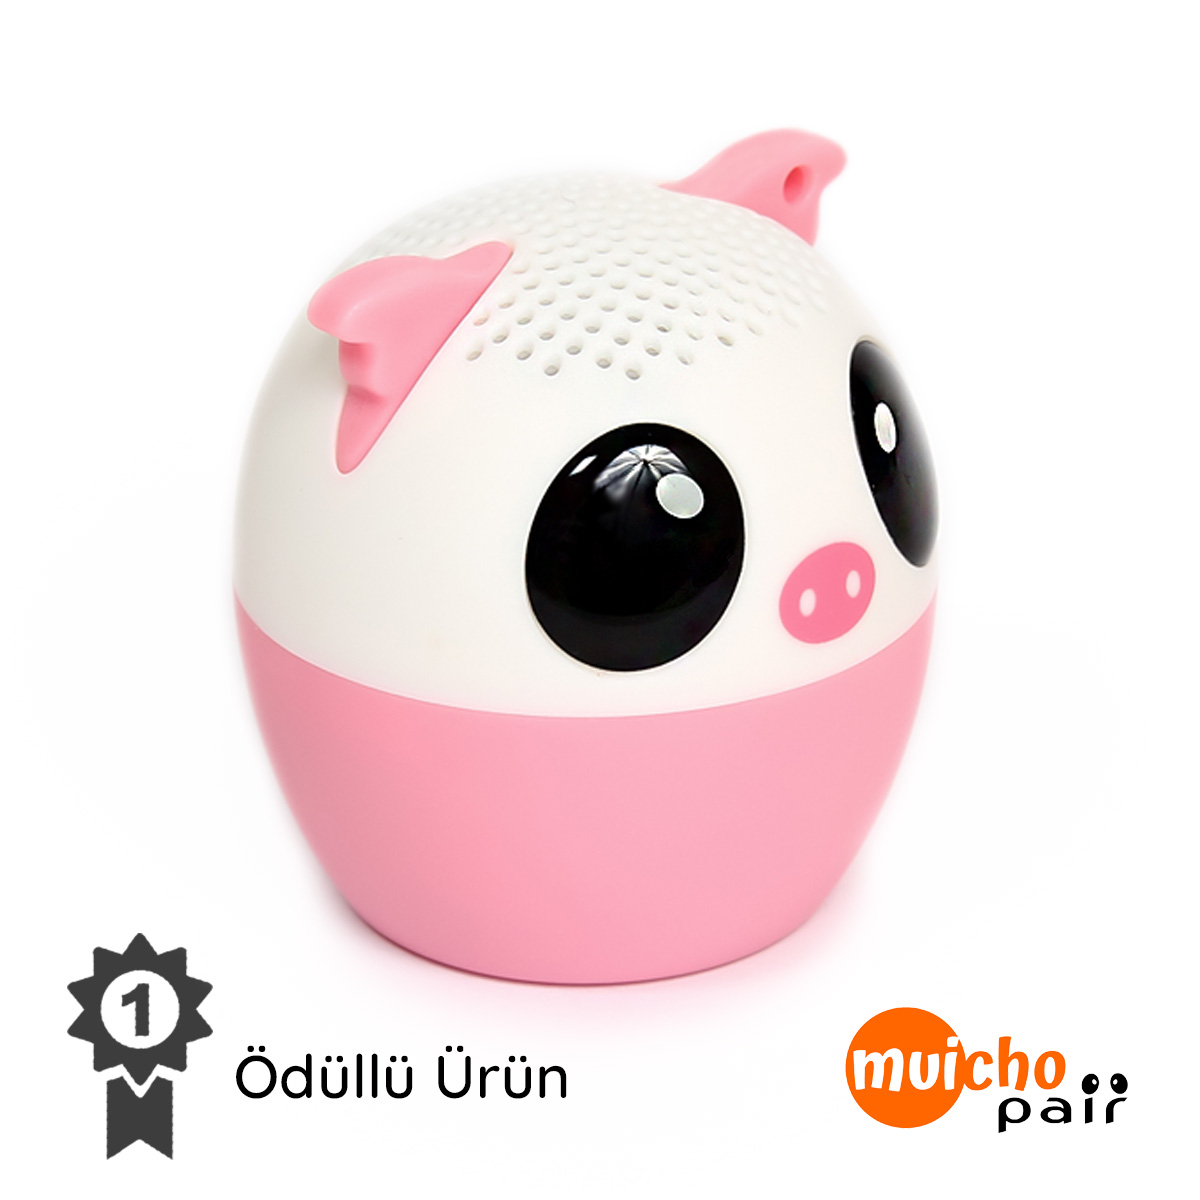 Muicho™ Pair - Eşleşebilen Mini Bluetooth Hoparlör - Piggy Sui